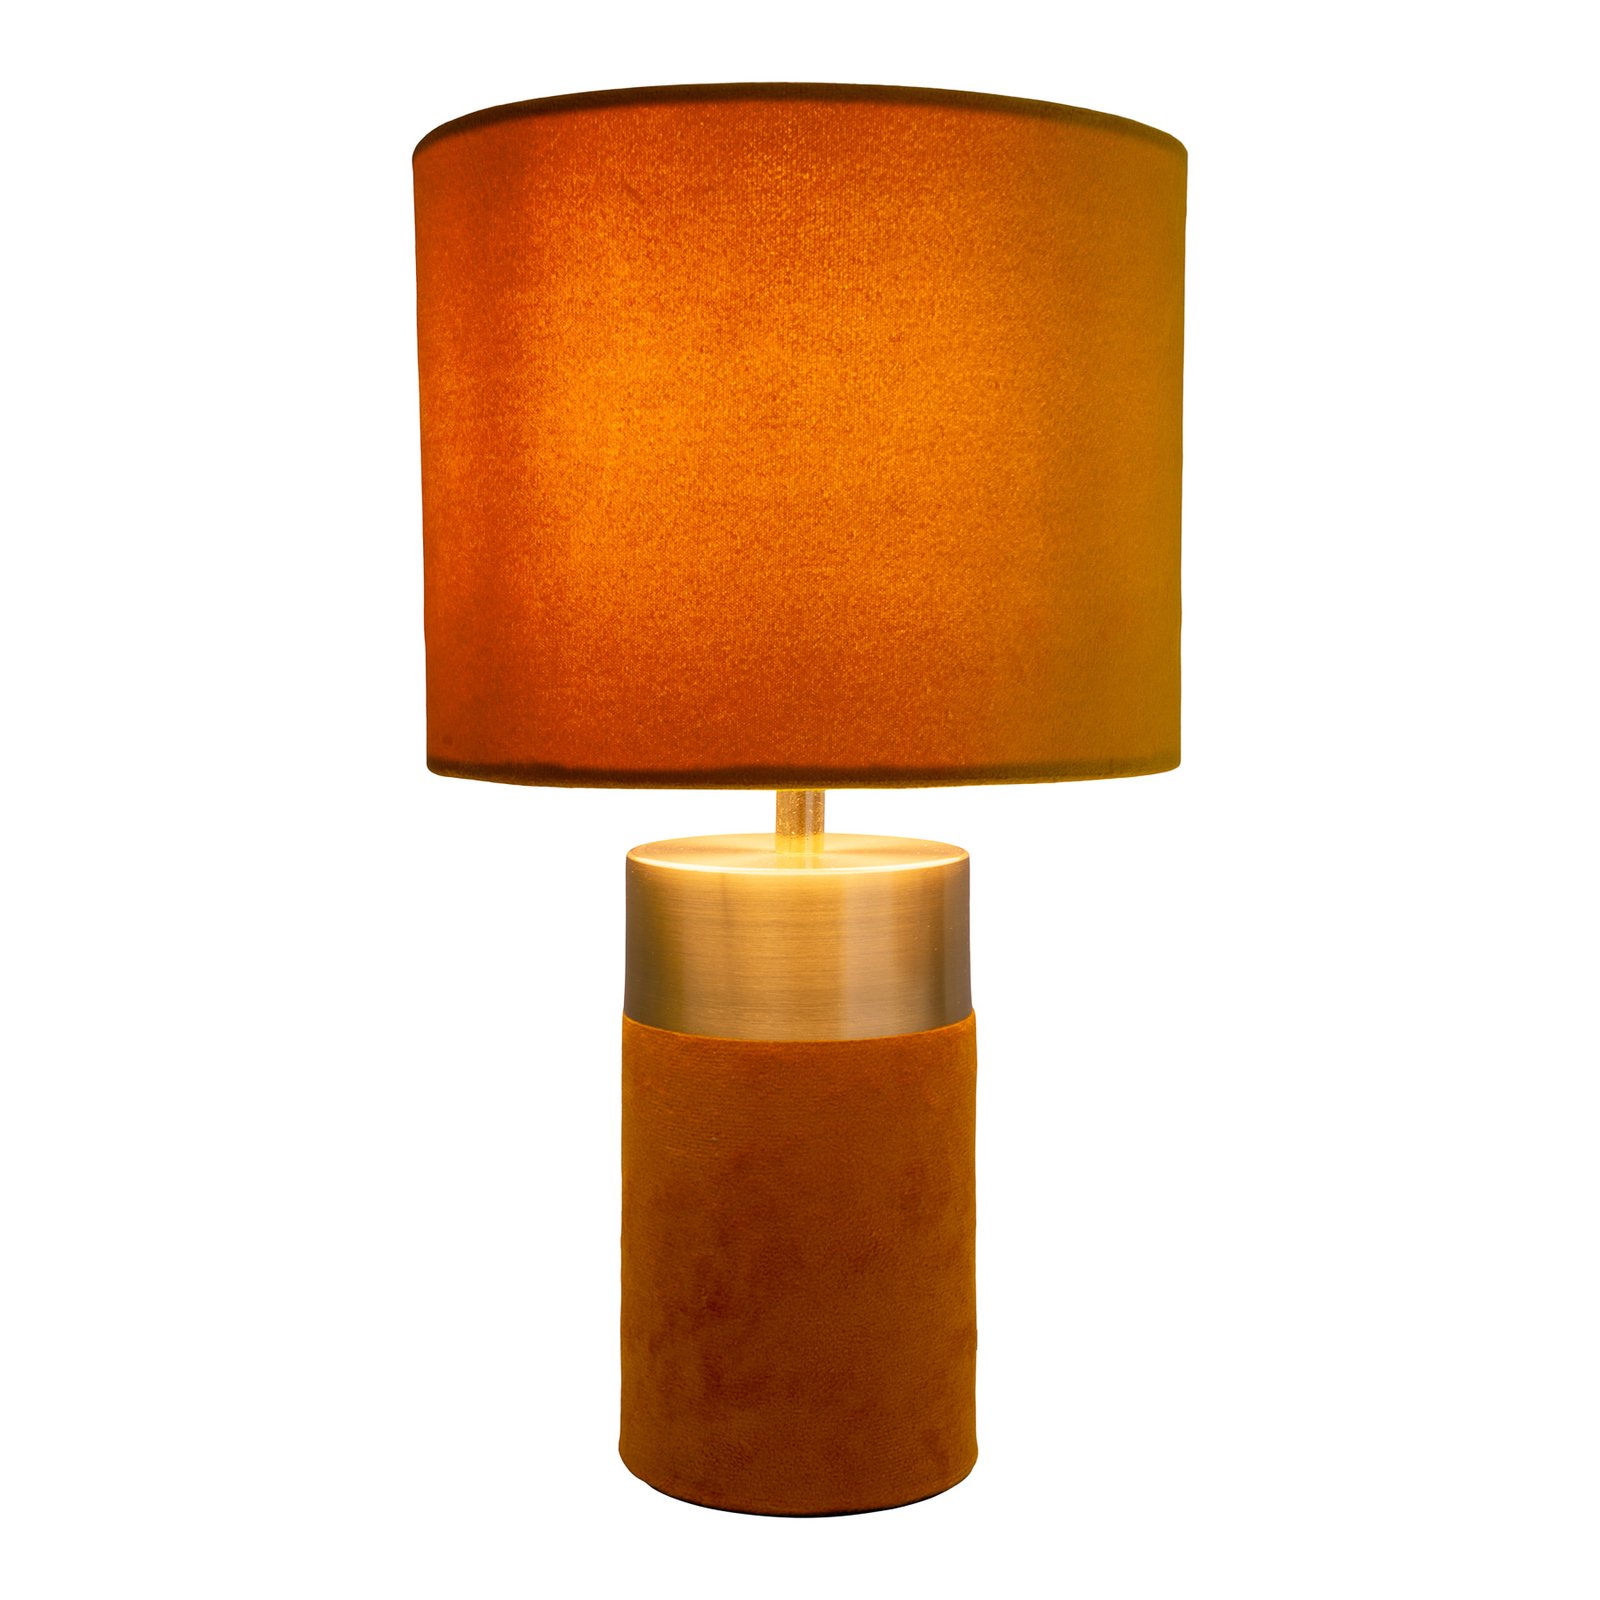 3189514 table lamp, fabric lampshade, orange